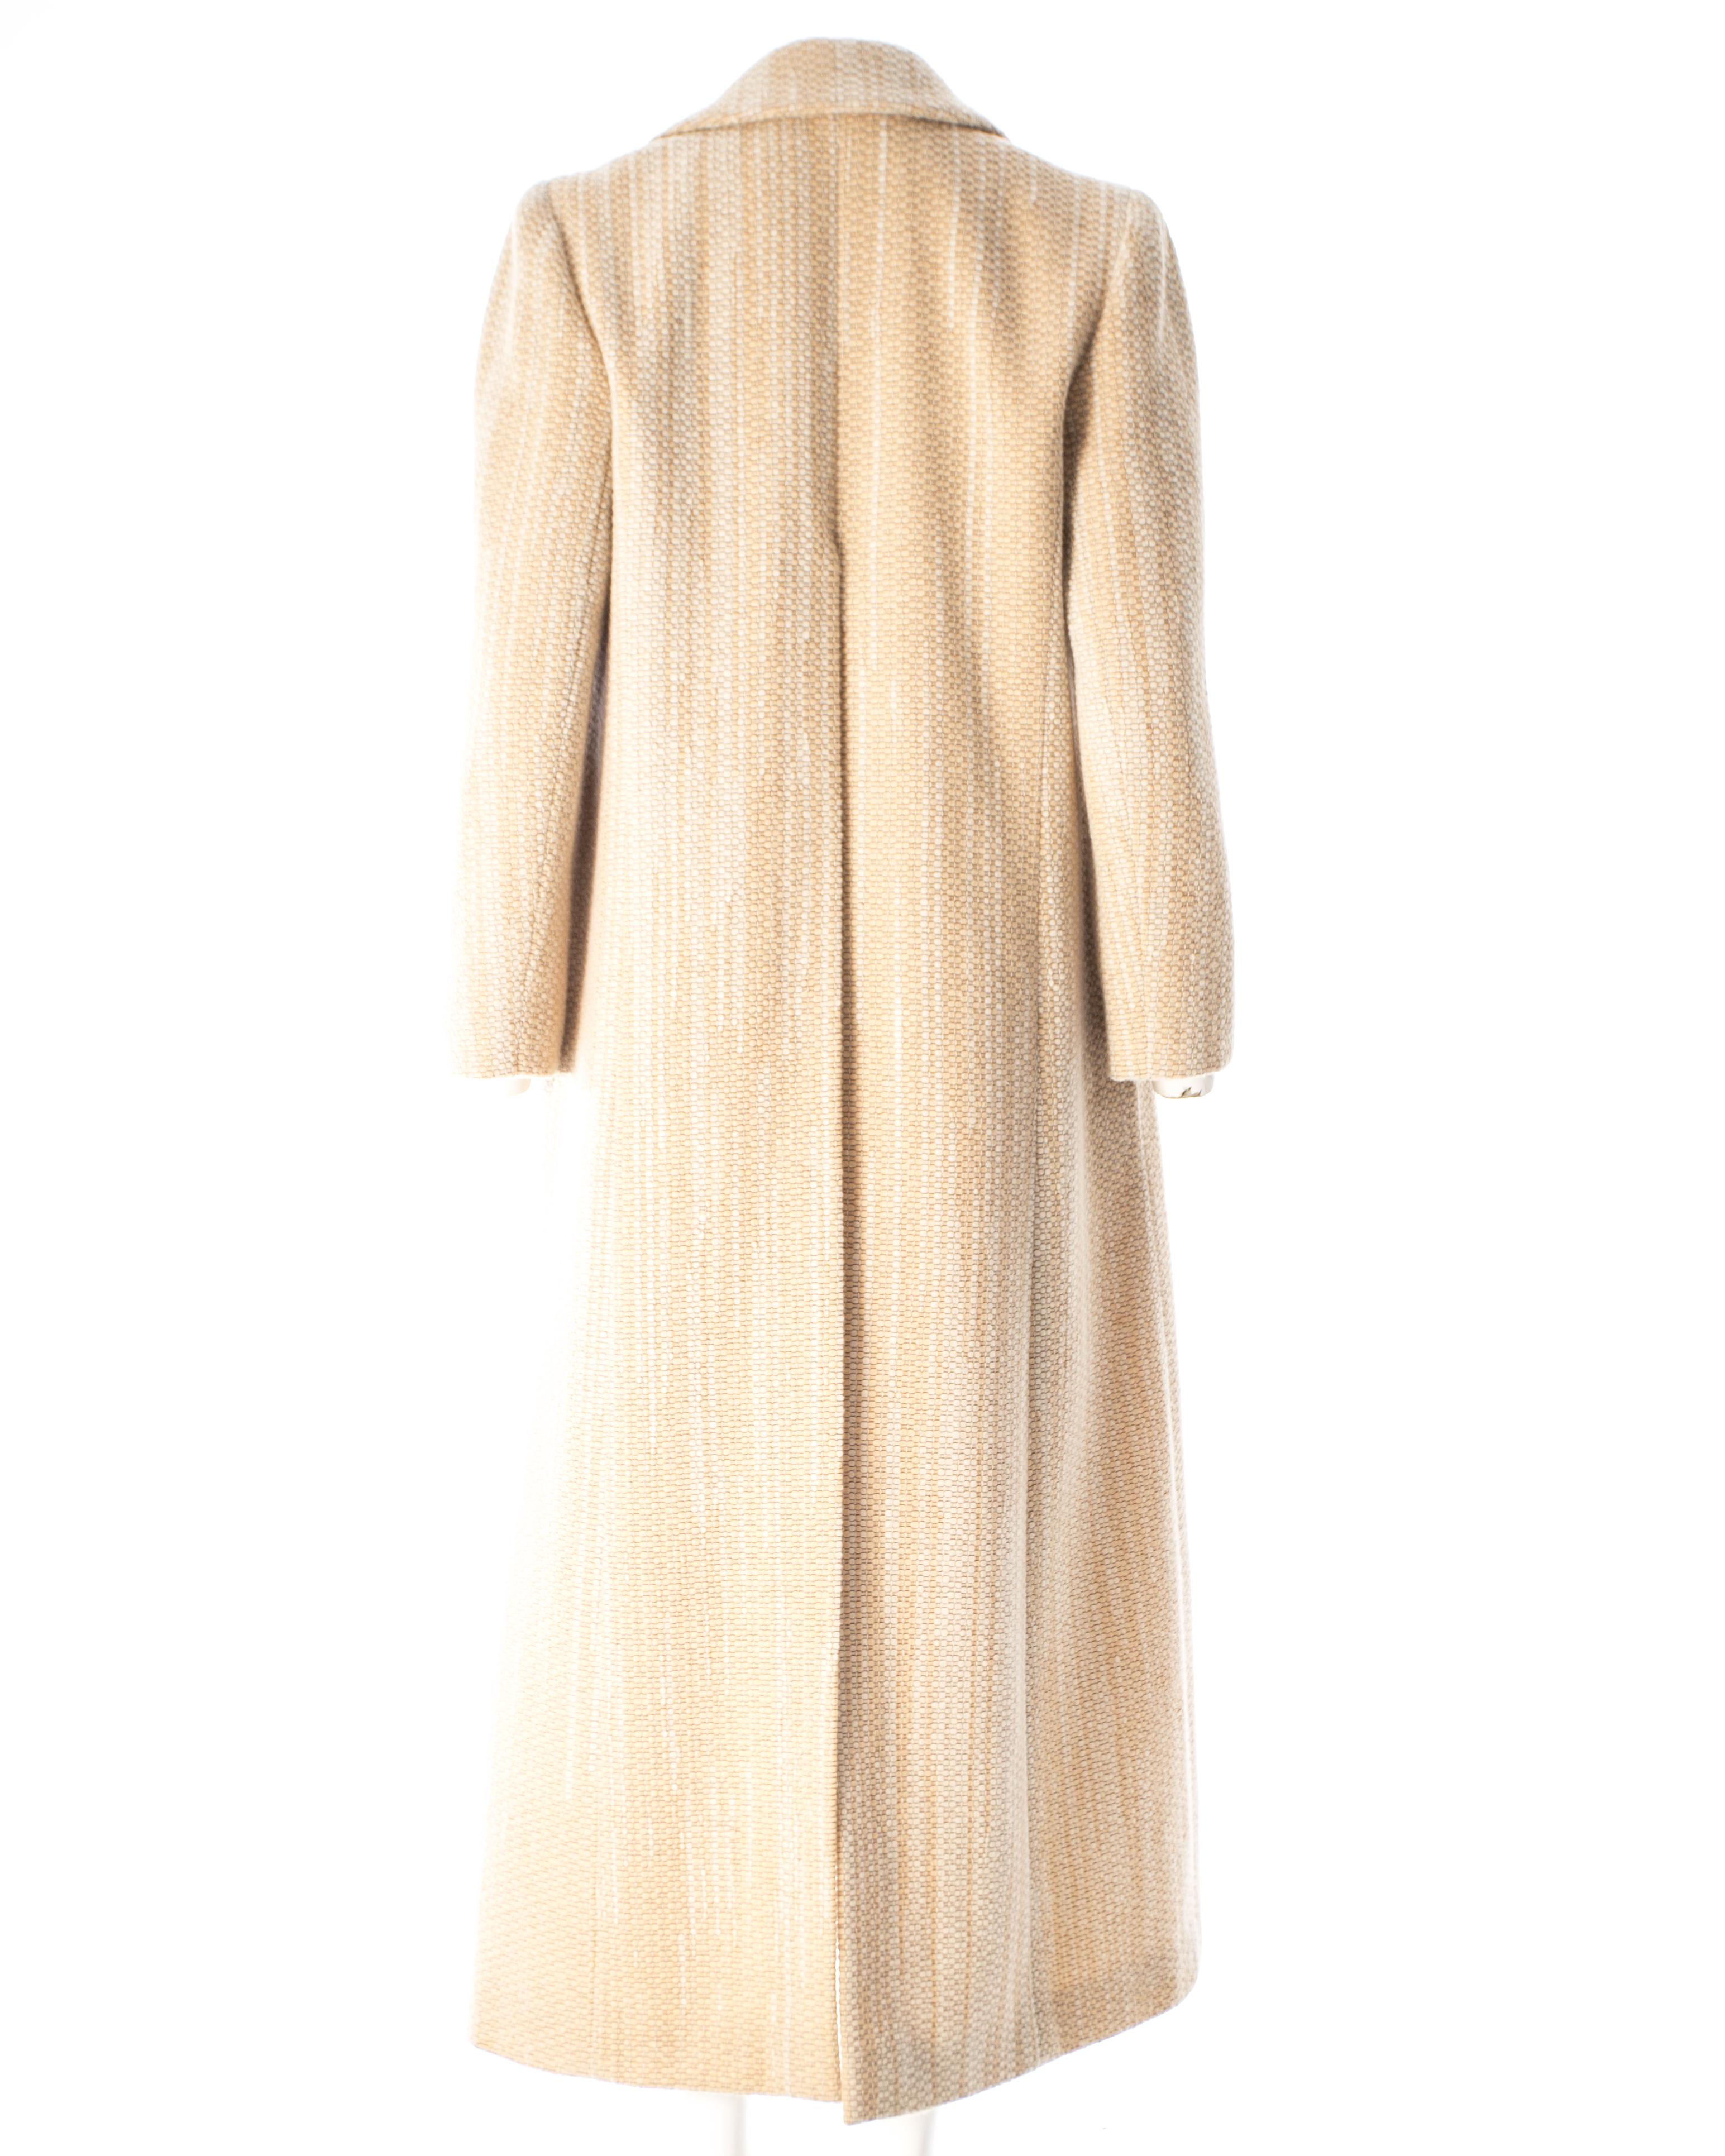 Chanel cream tweed maxi coat, A / W 2001 1